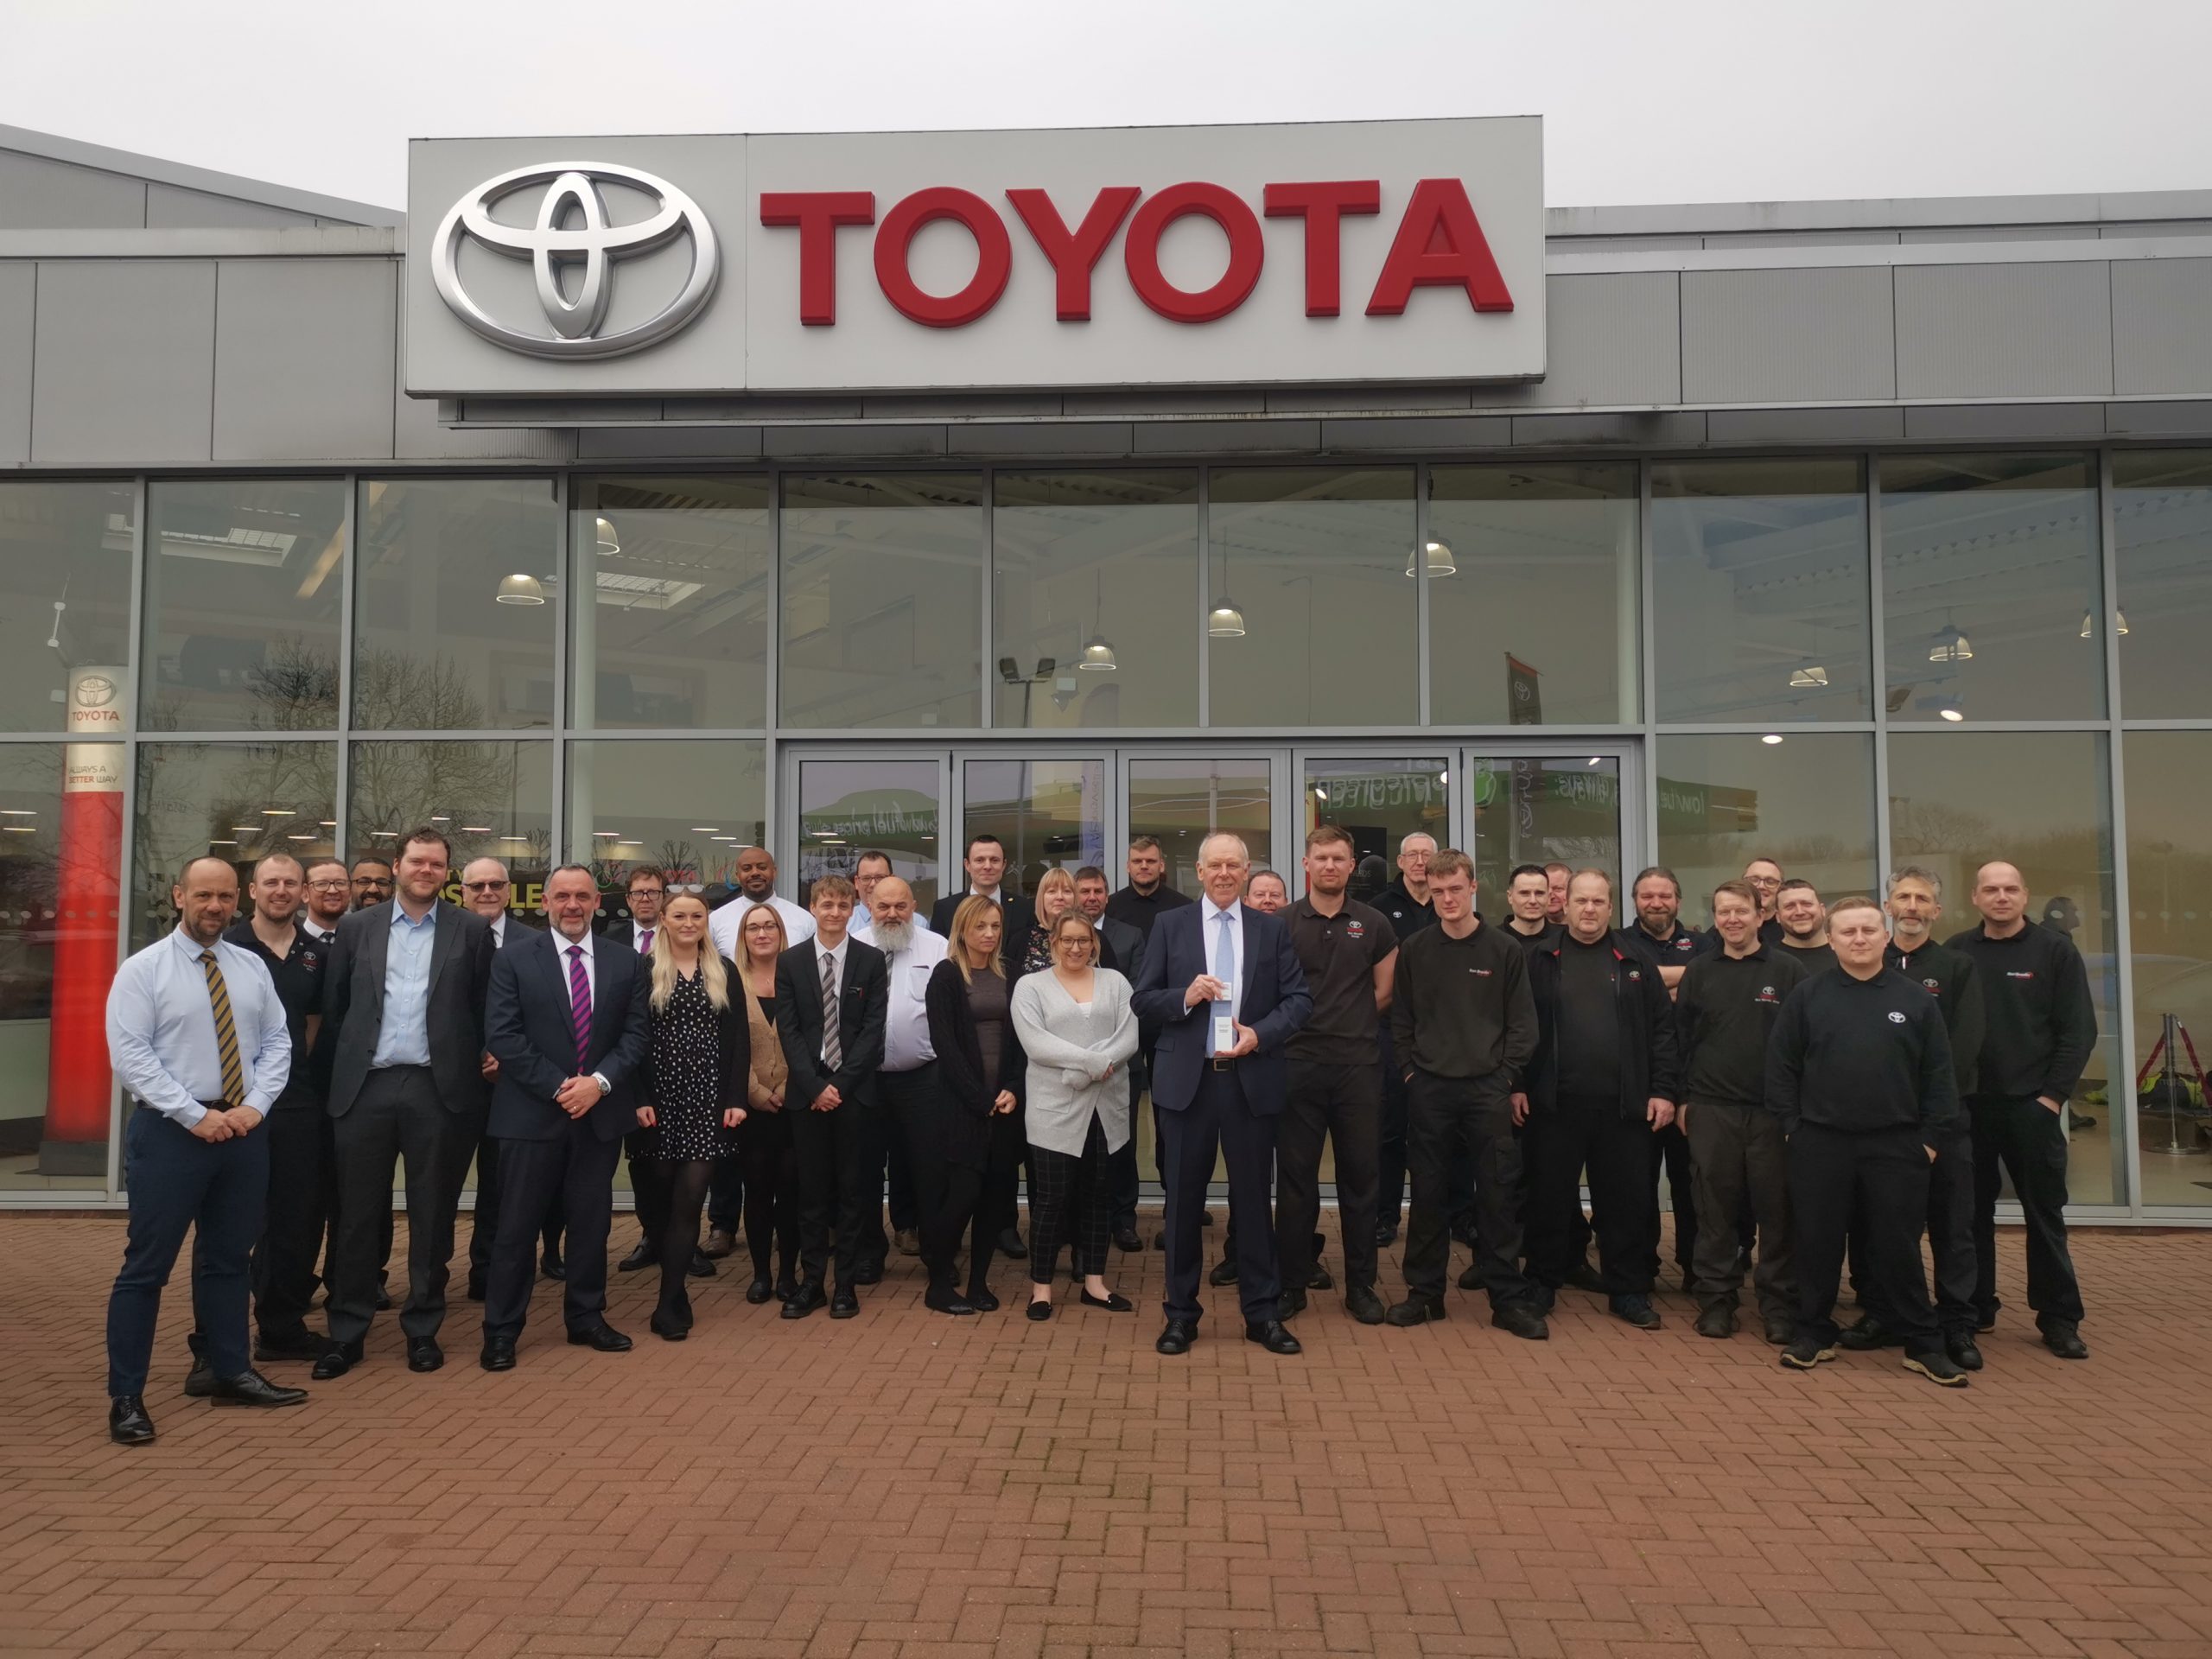 Car dealer wins Toyota customer service accolade